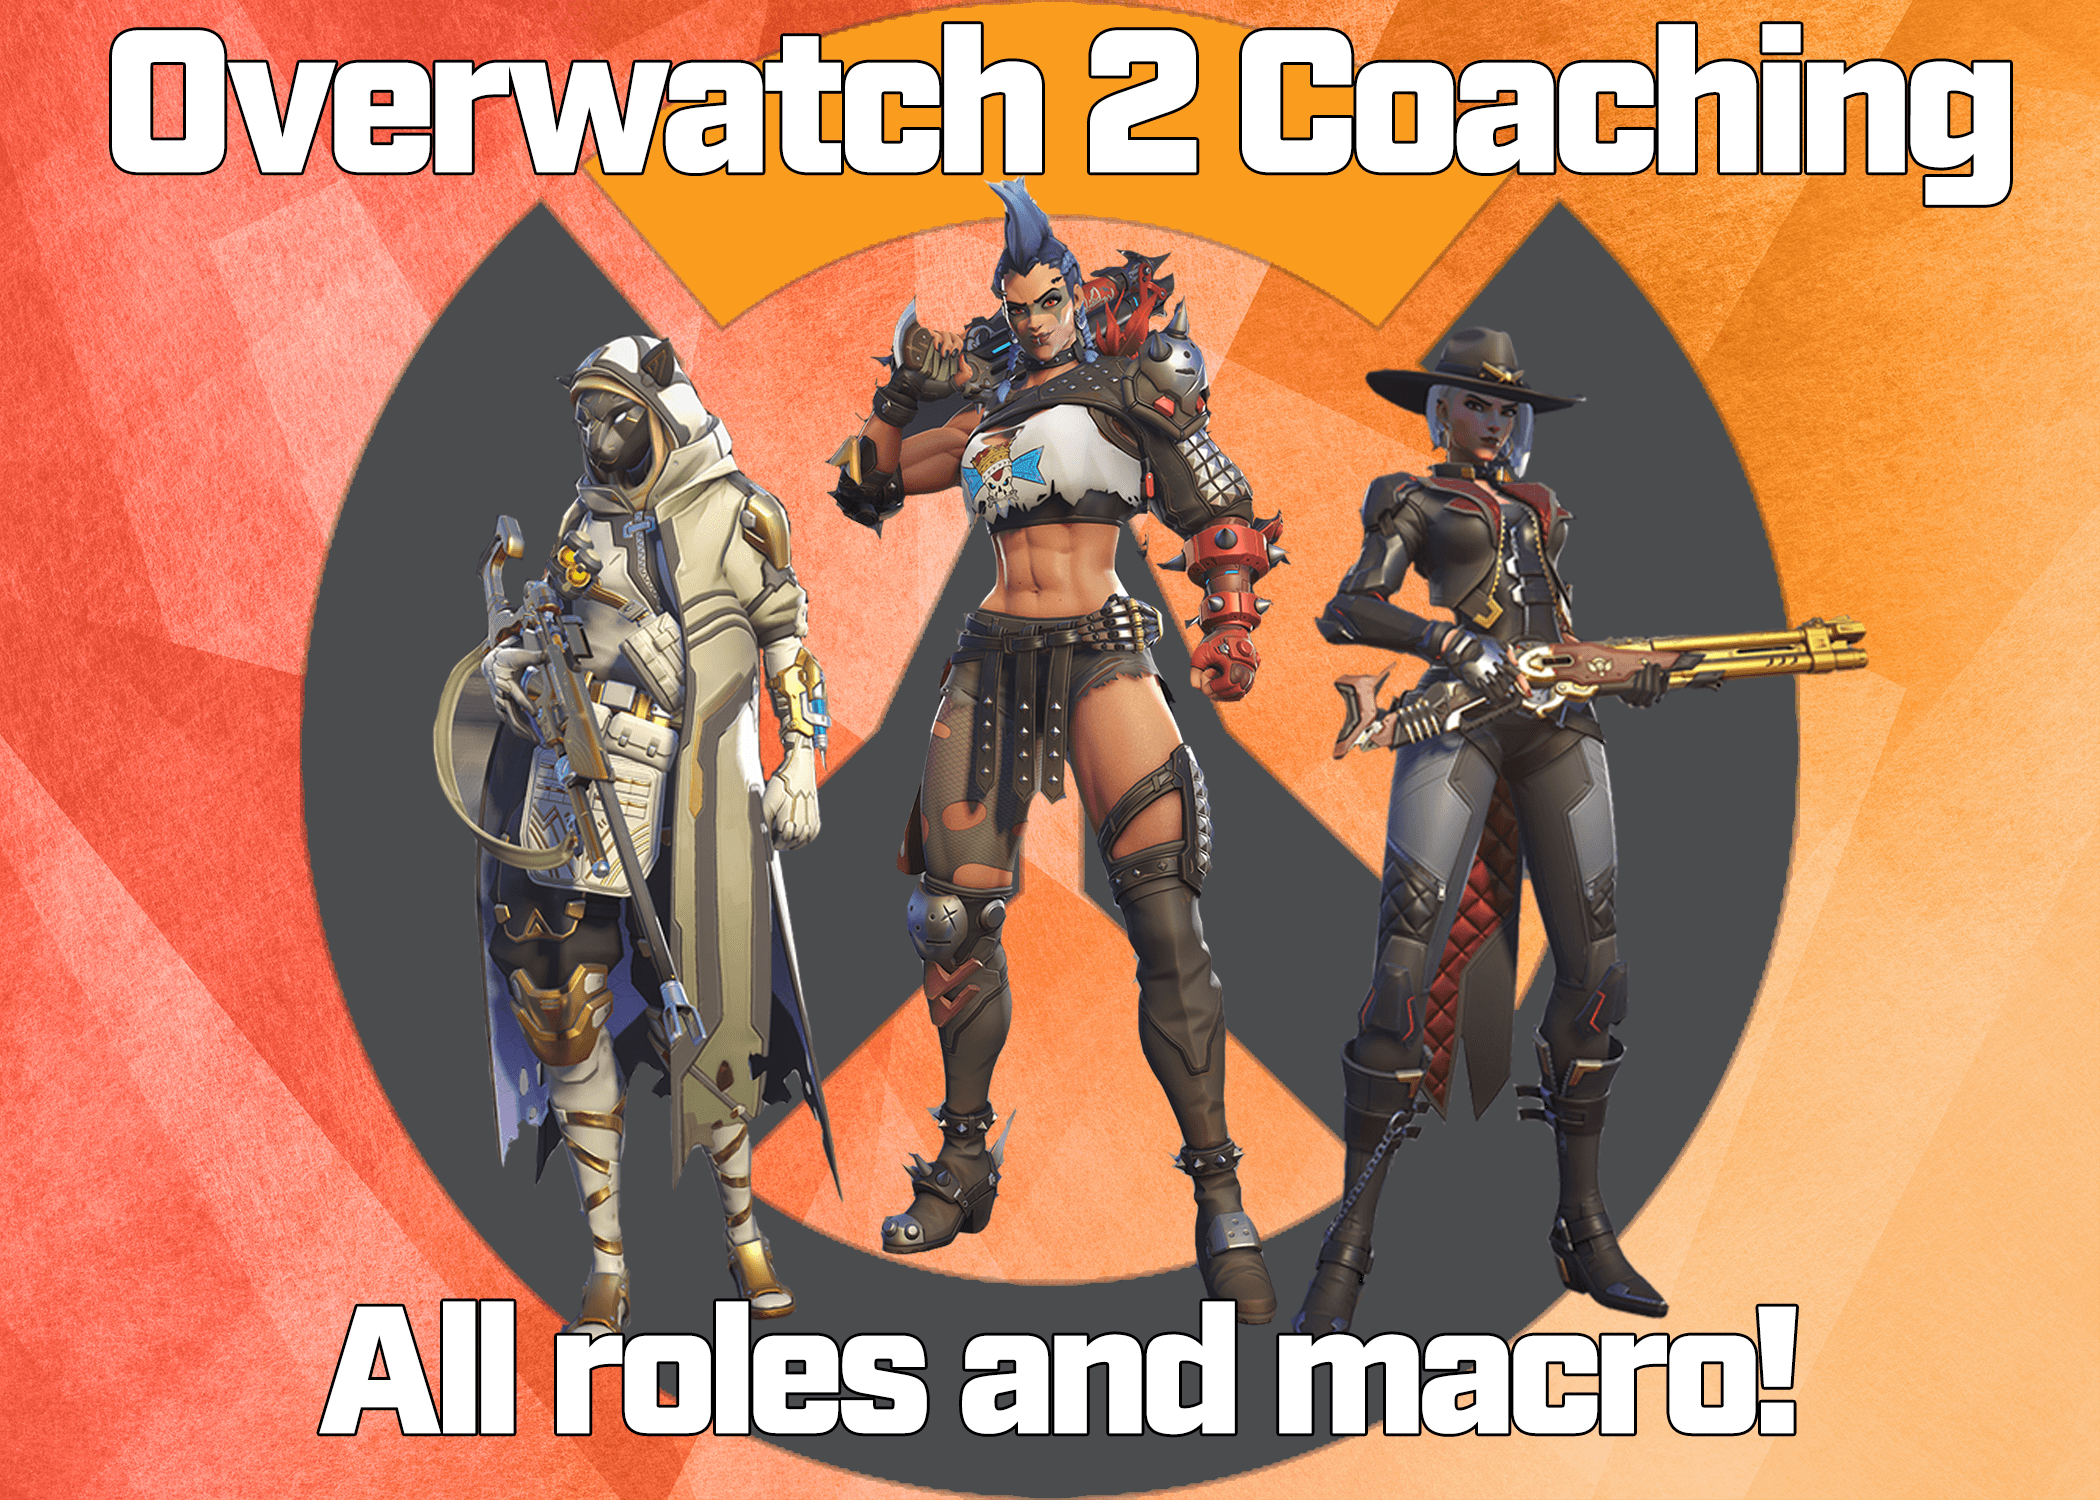 coach feature image